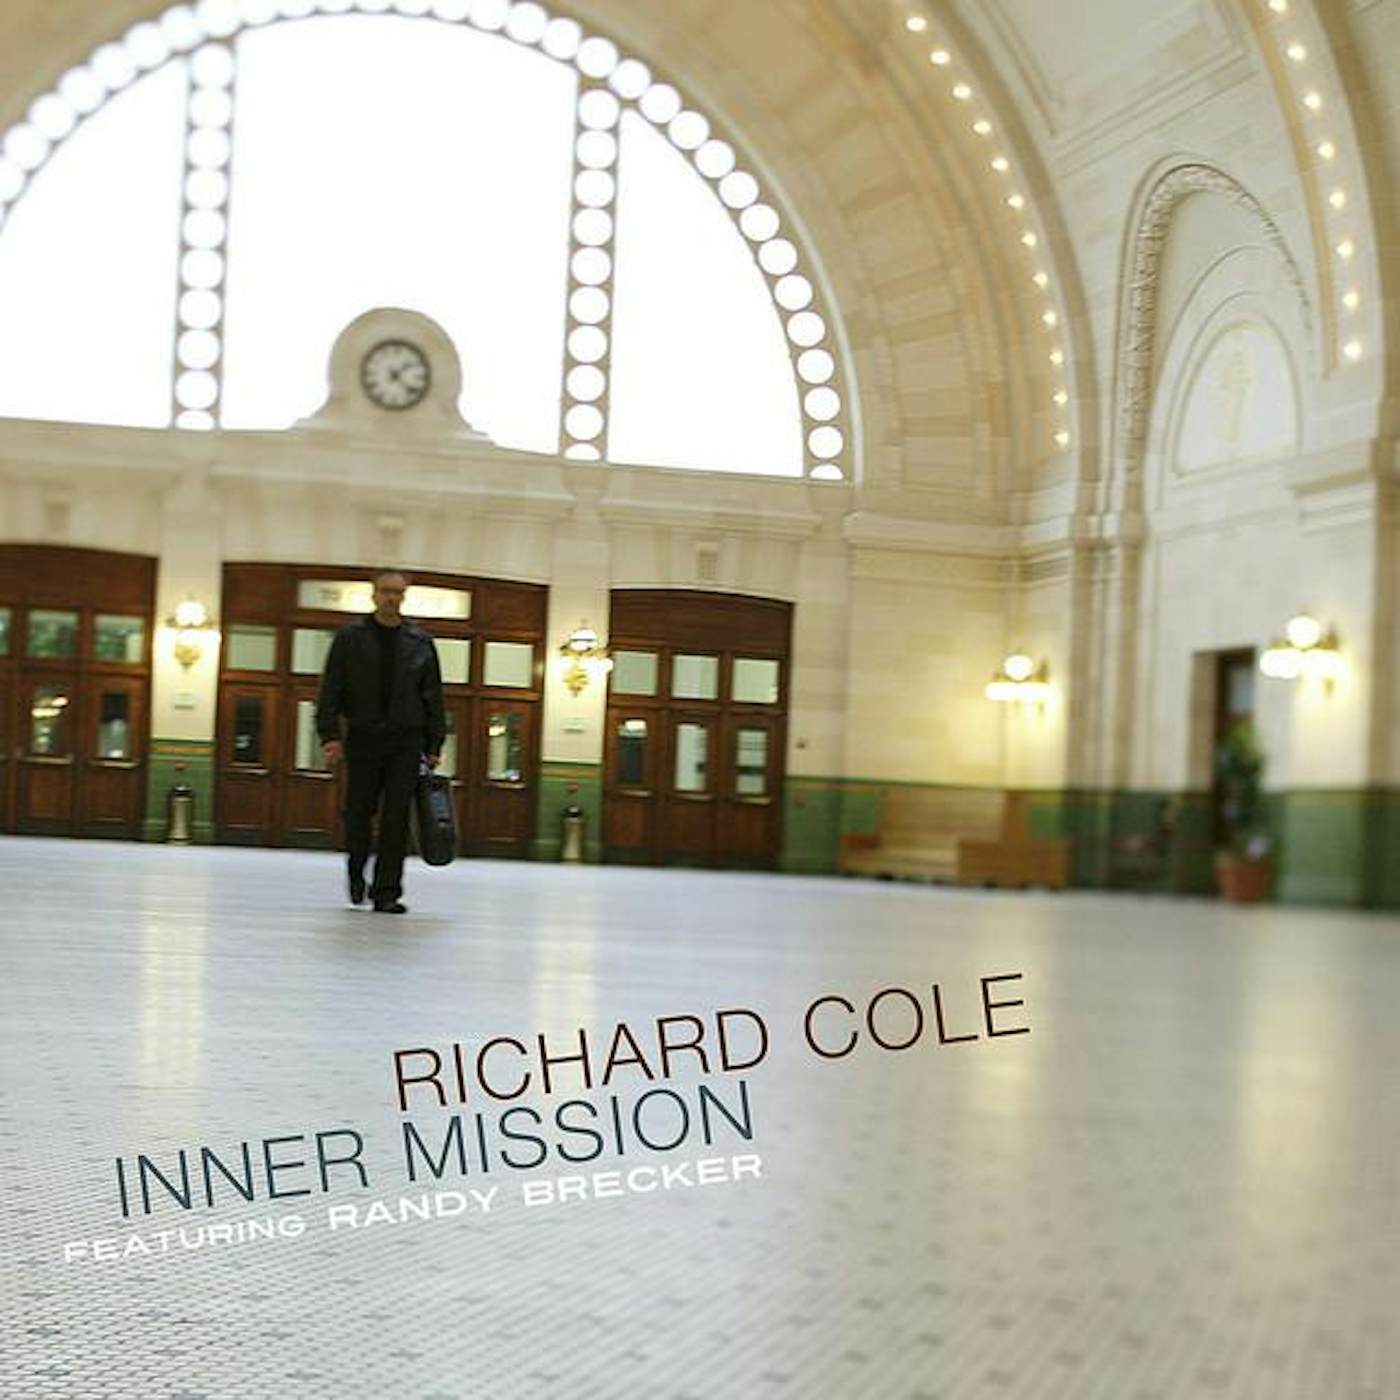 Richard Cole